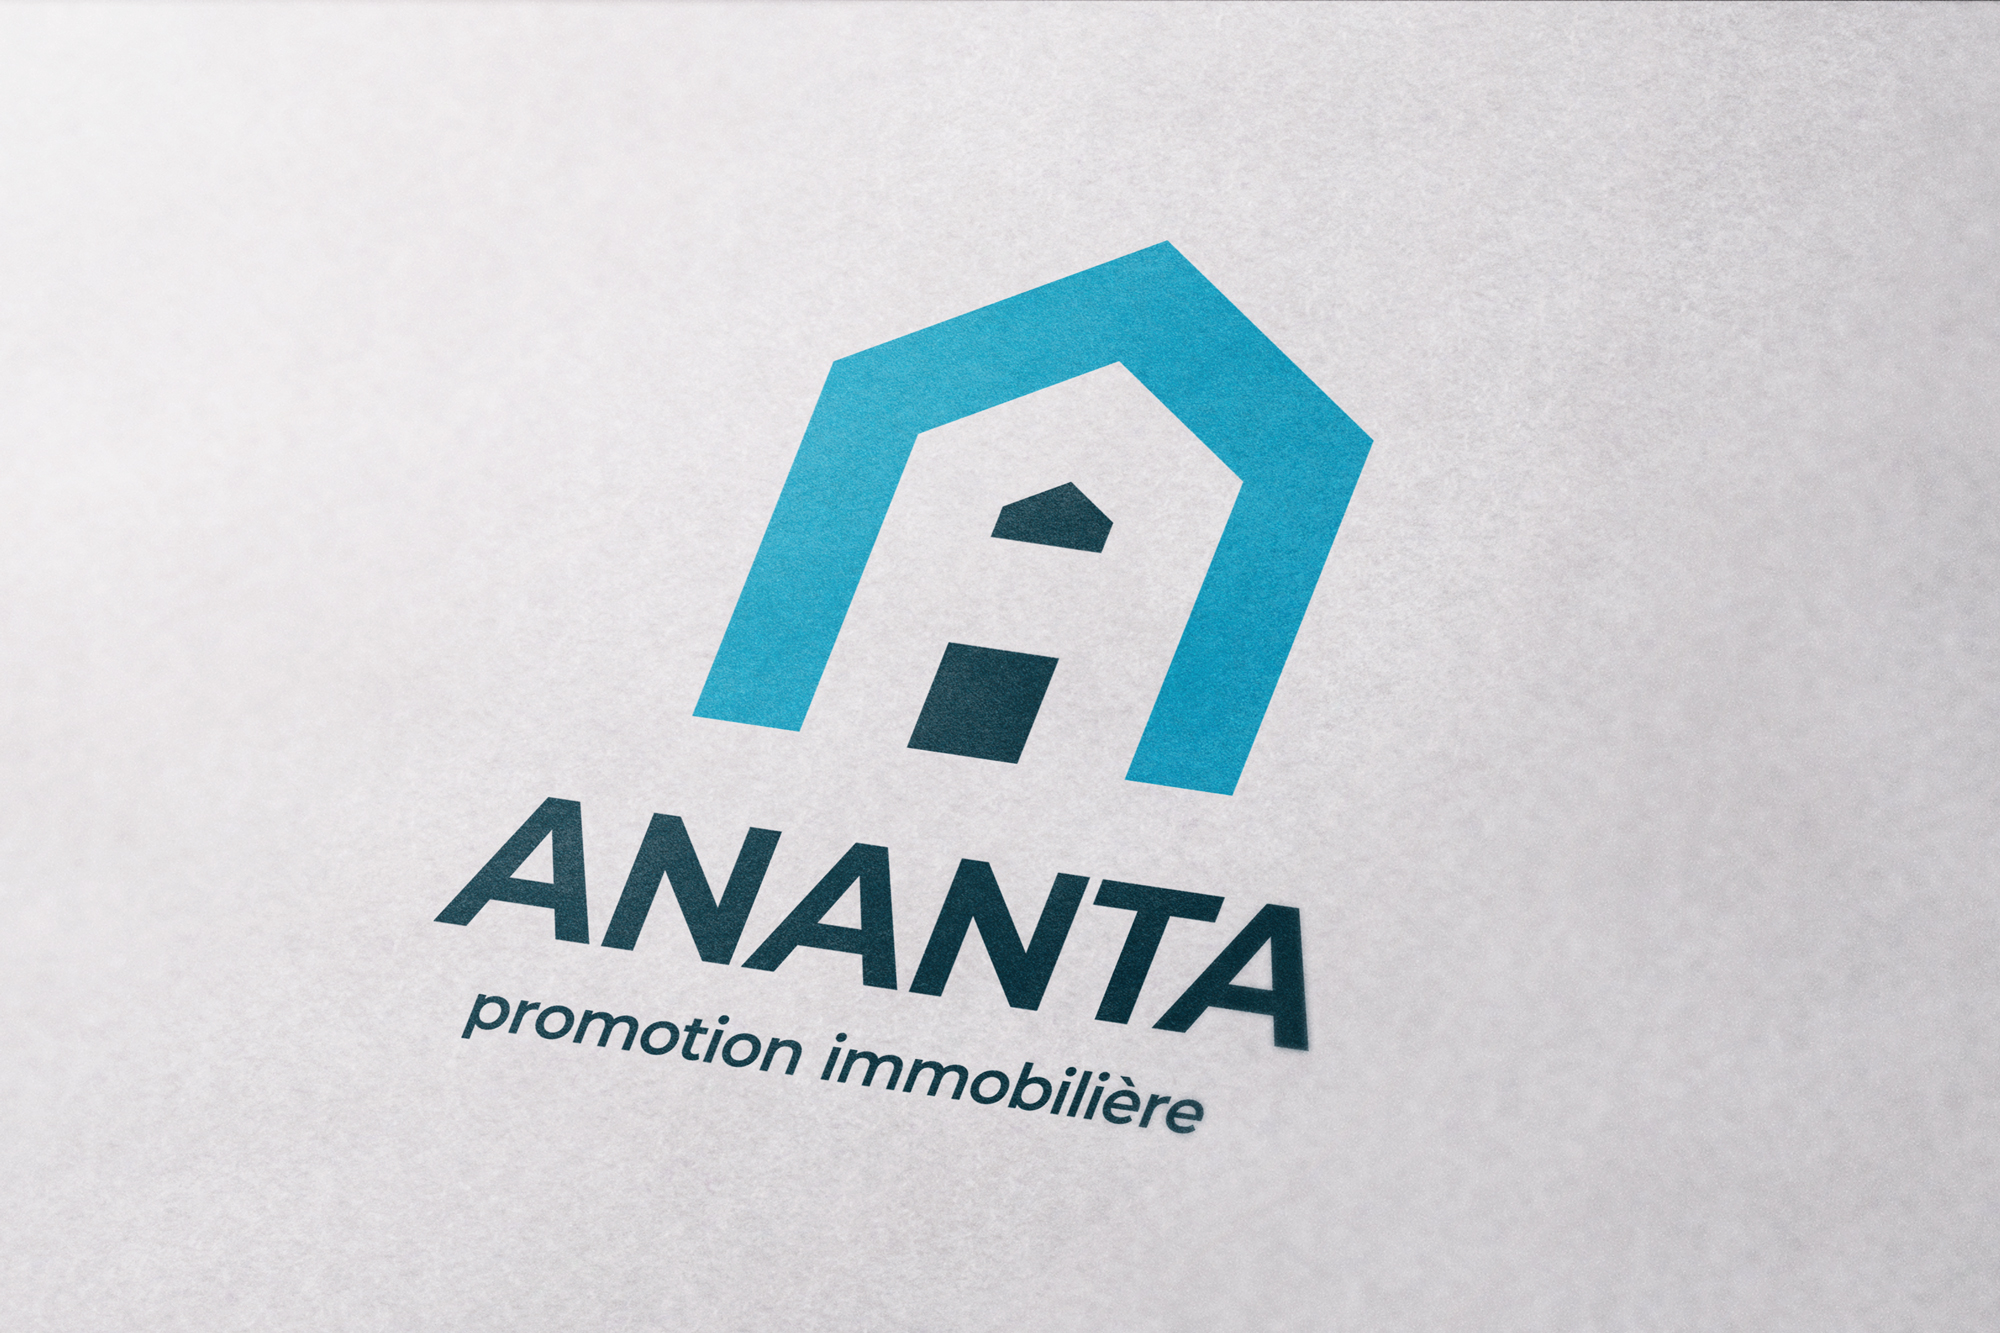 Black Cherries - Ananta Promotion Immobilière